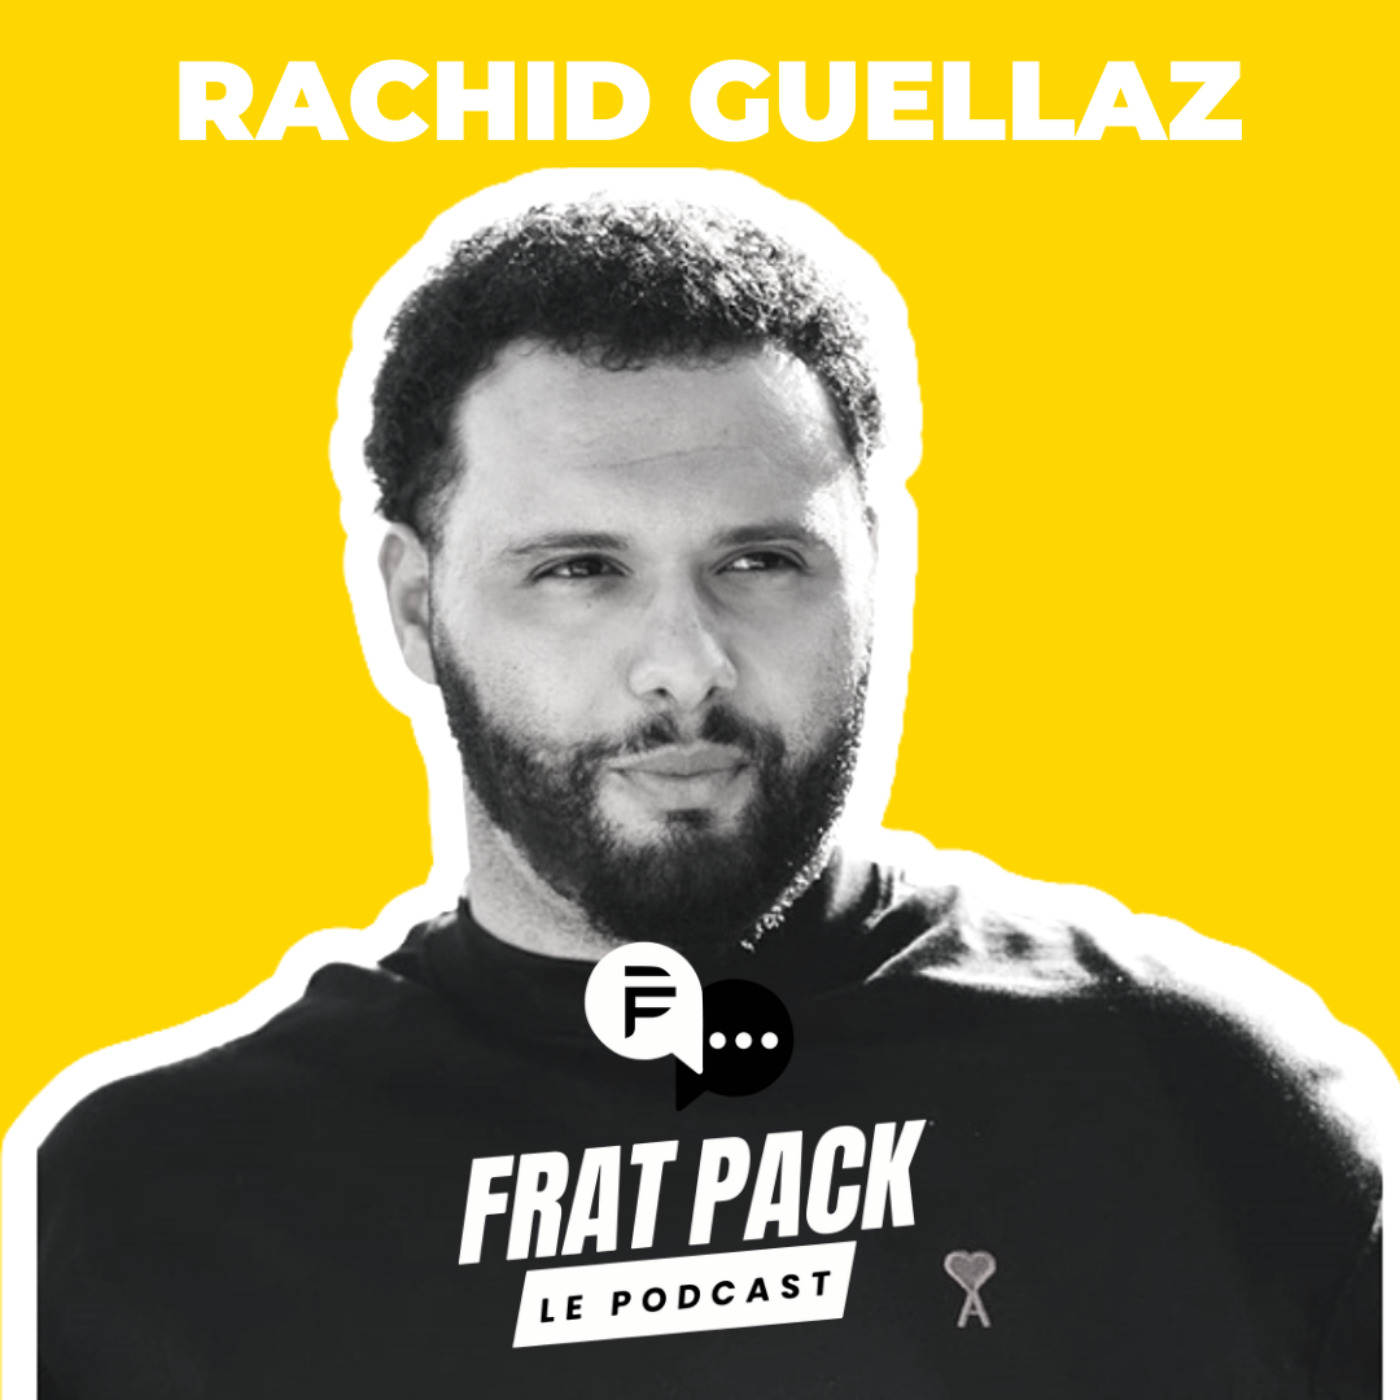 S02E02 Frat Pack avec Rachid Guellaz